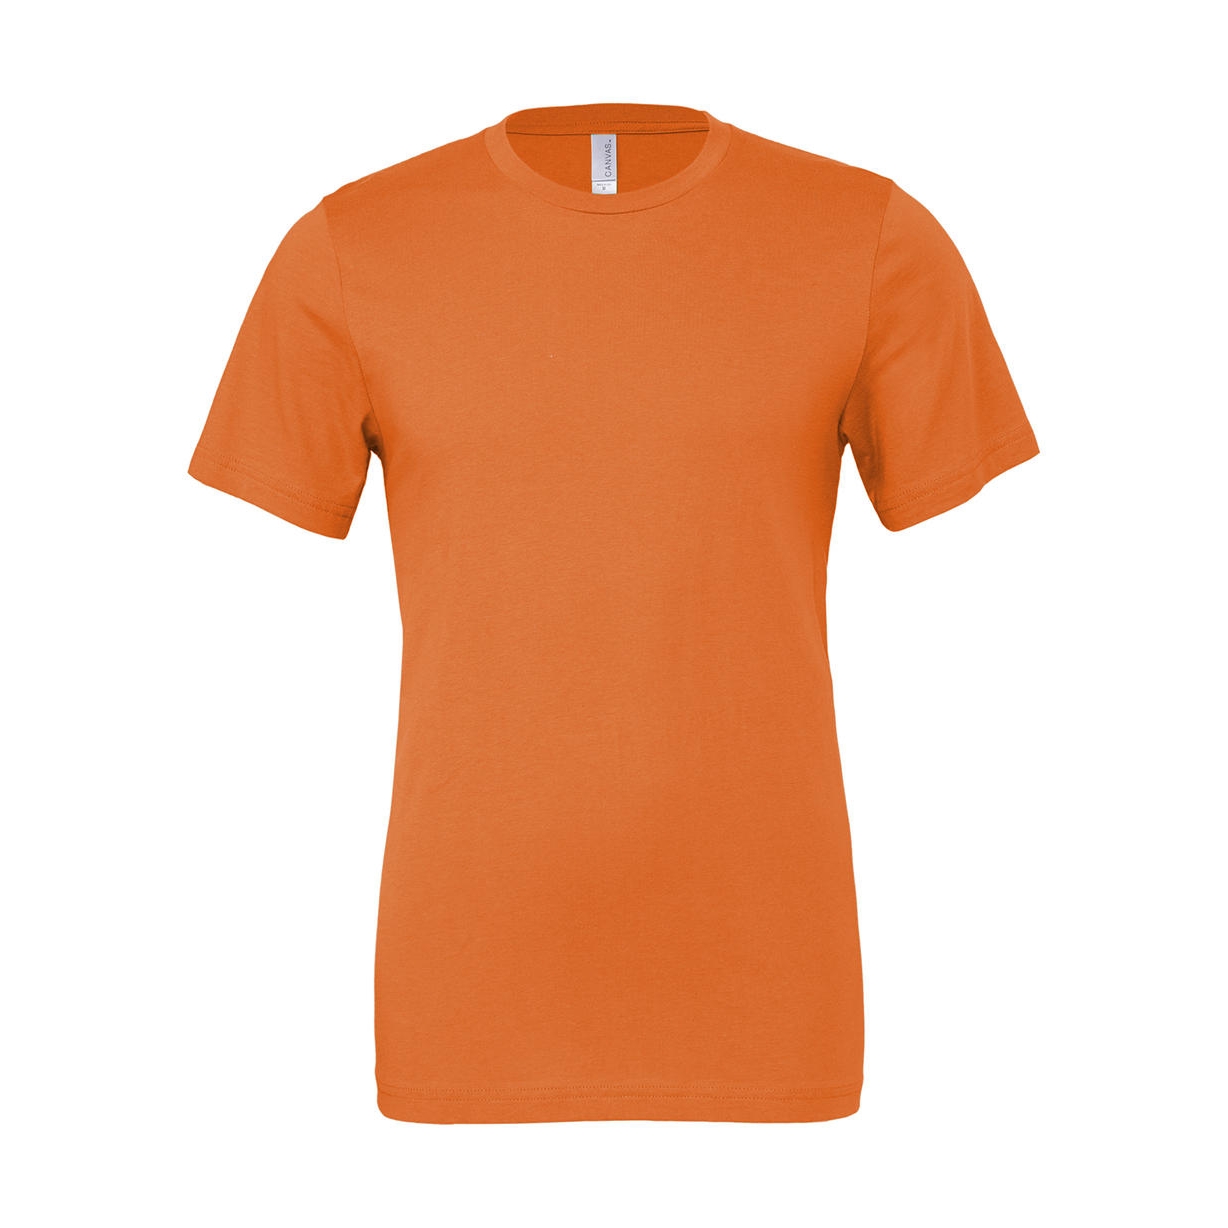 Tričko Bella Jersey - oranžové, L